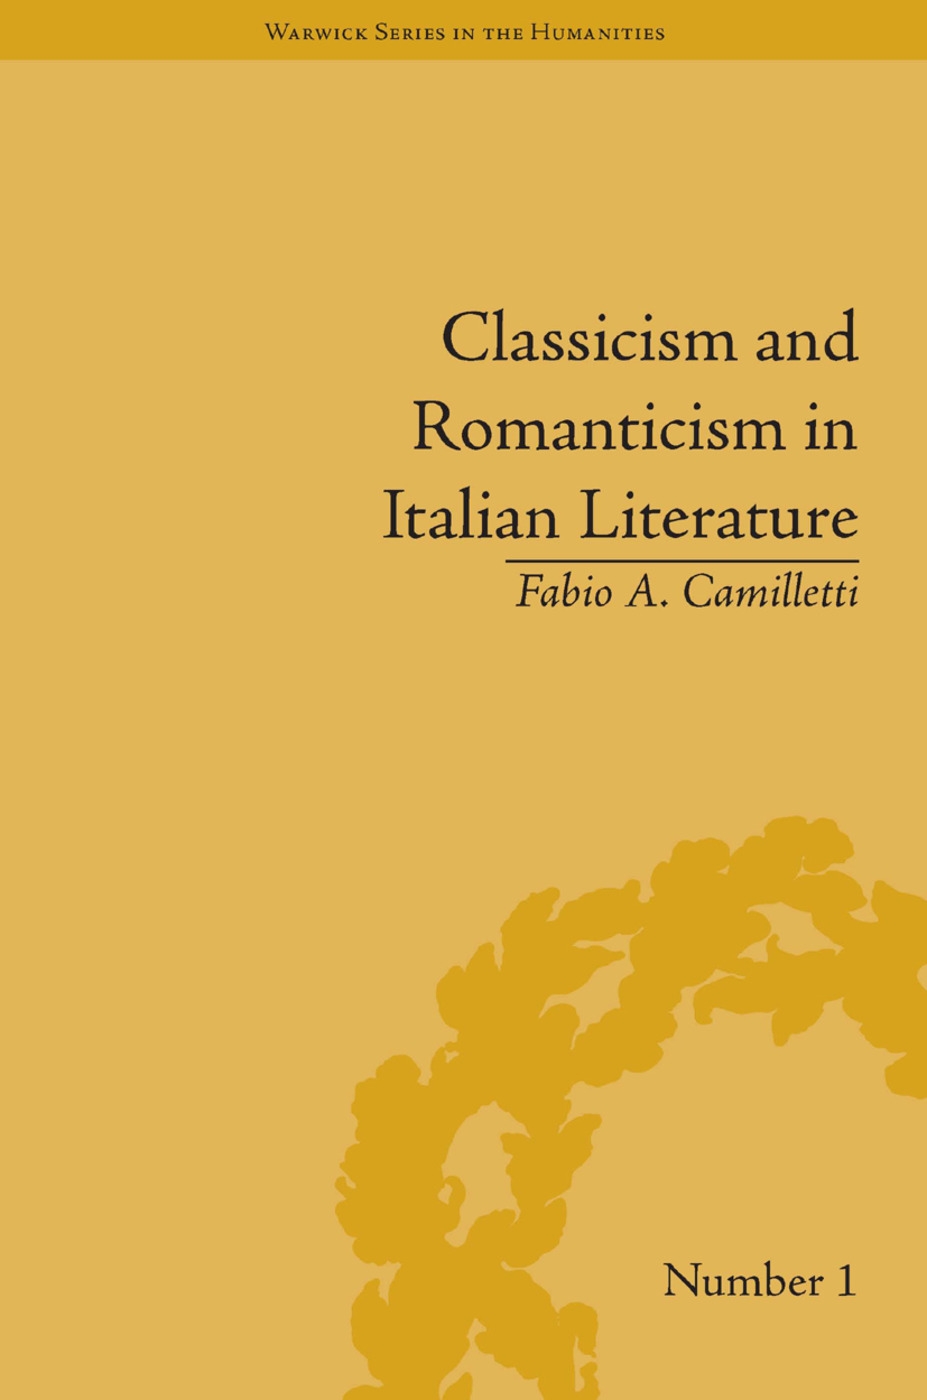 Classicism and Romanticism in Italian Literature: Leopardi’s Discourse on Romantic Poetry